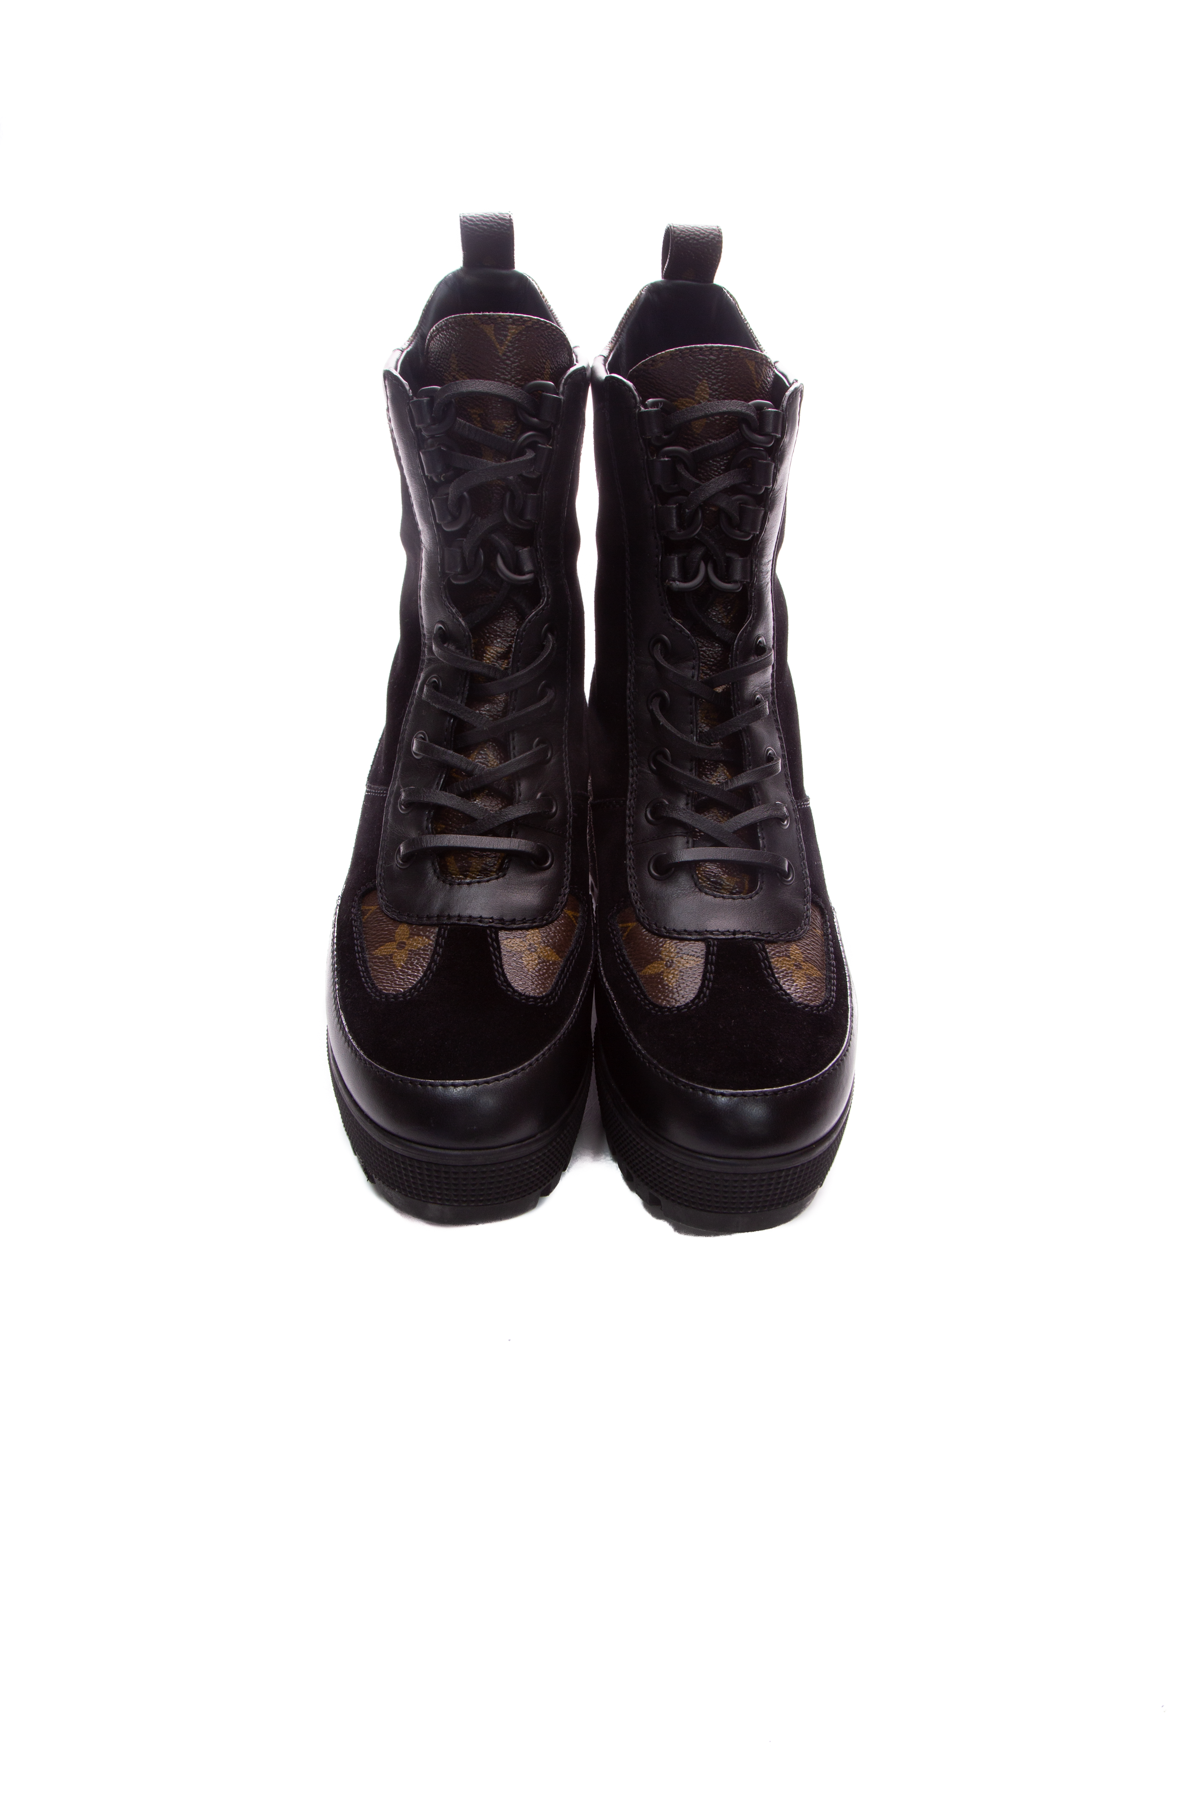 Louis Vuitton Desert Laureate Boots - Size 39